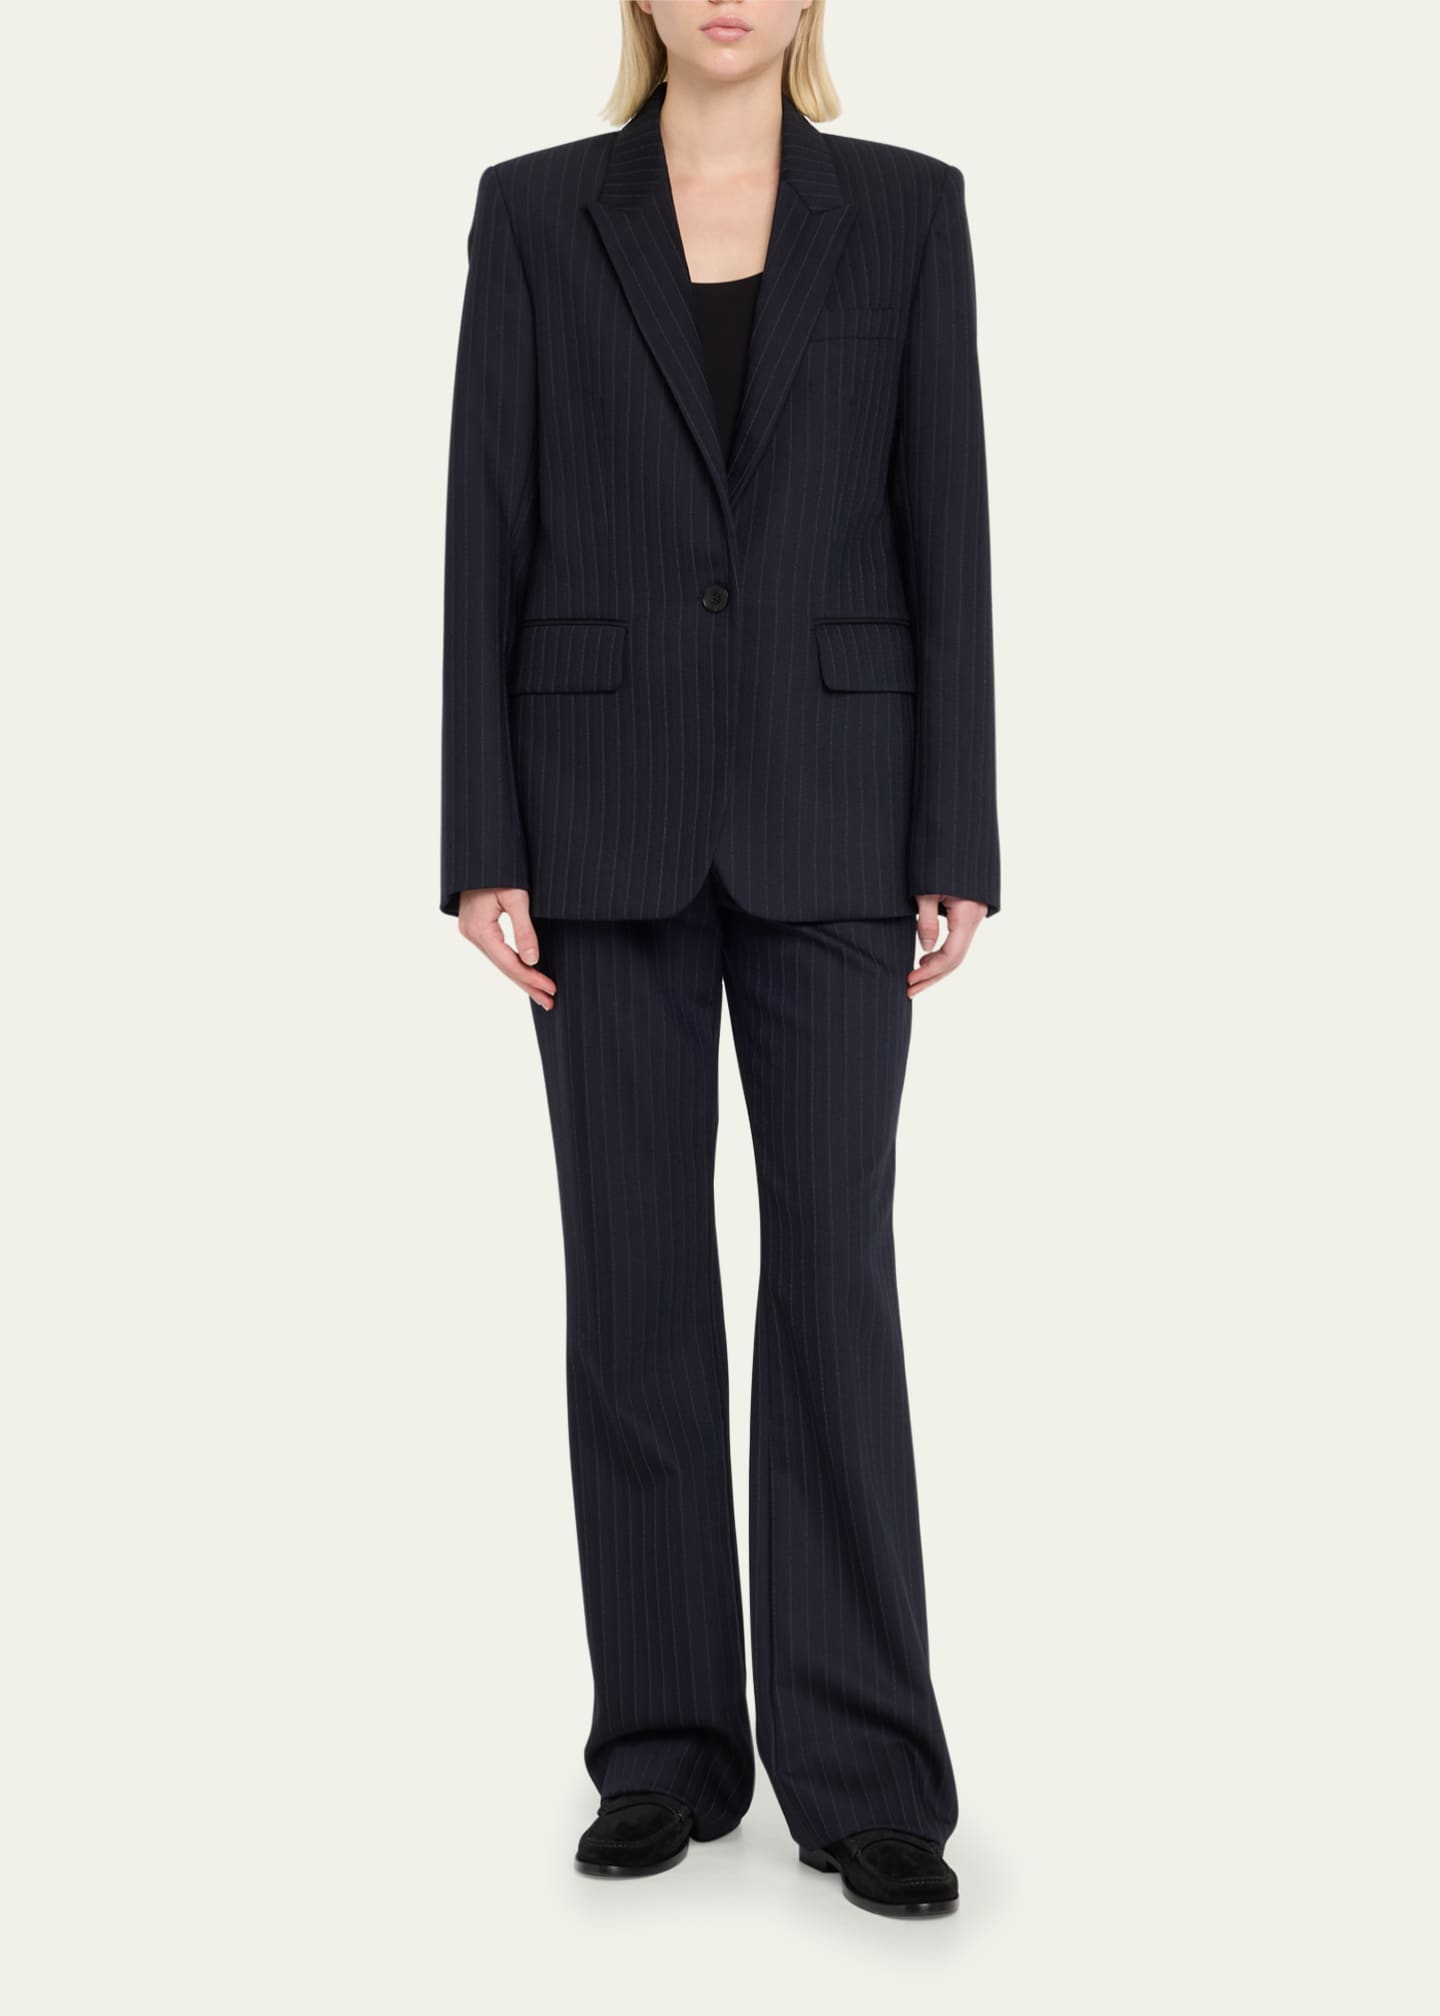 Black Corette stretch wool-blend flared trousers, Nili Lotan